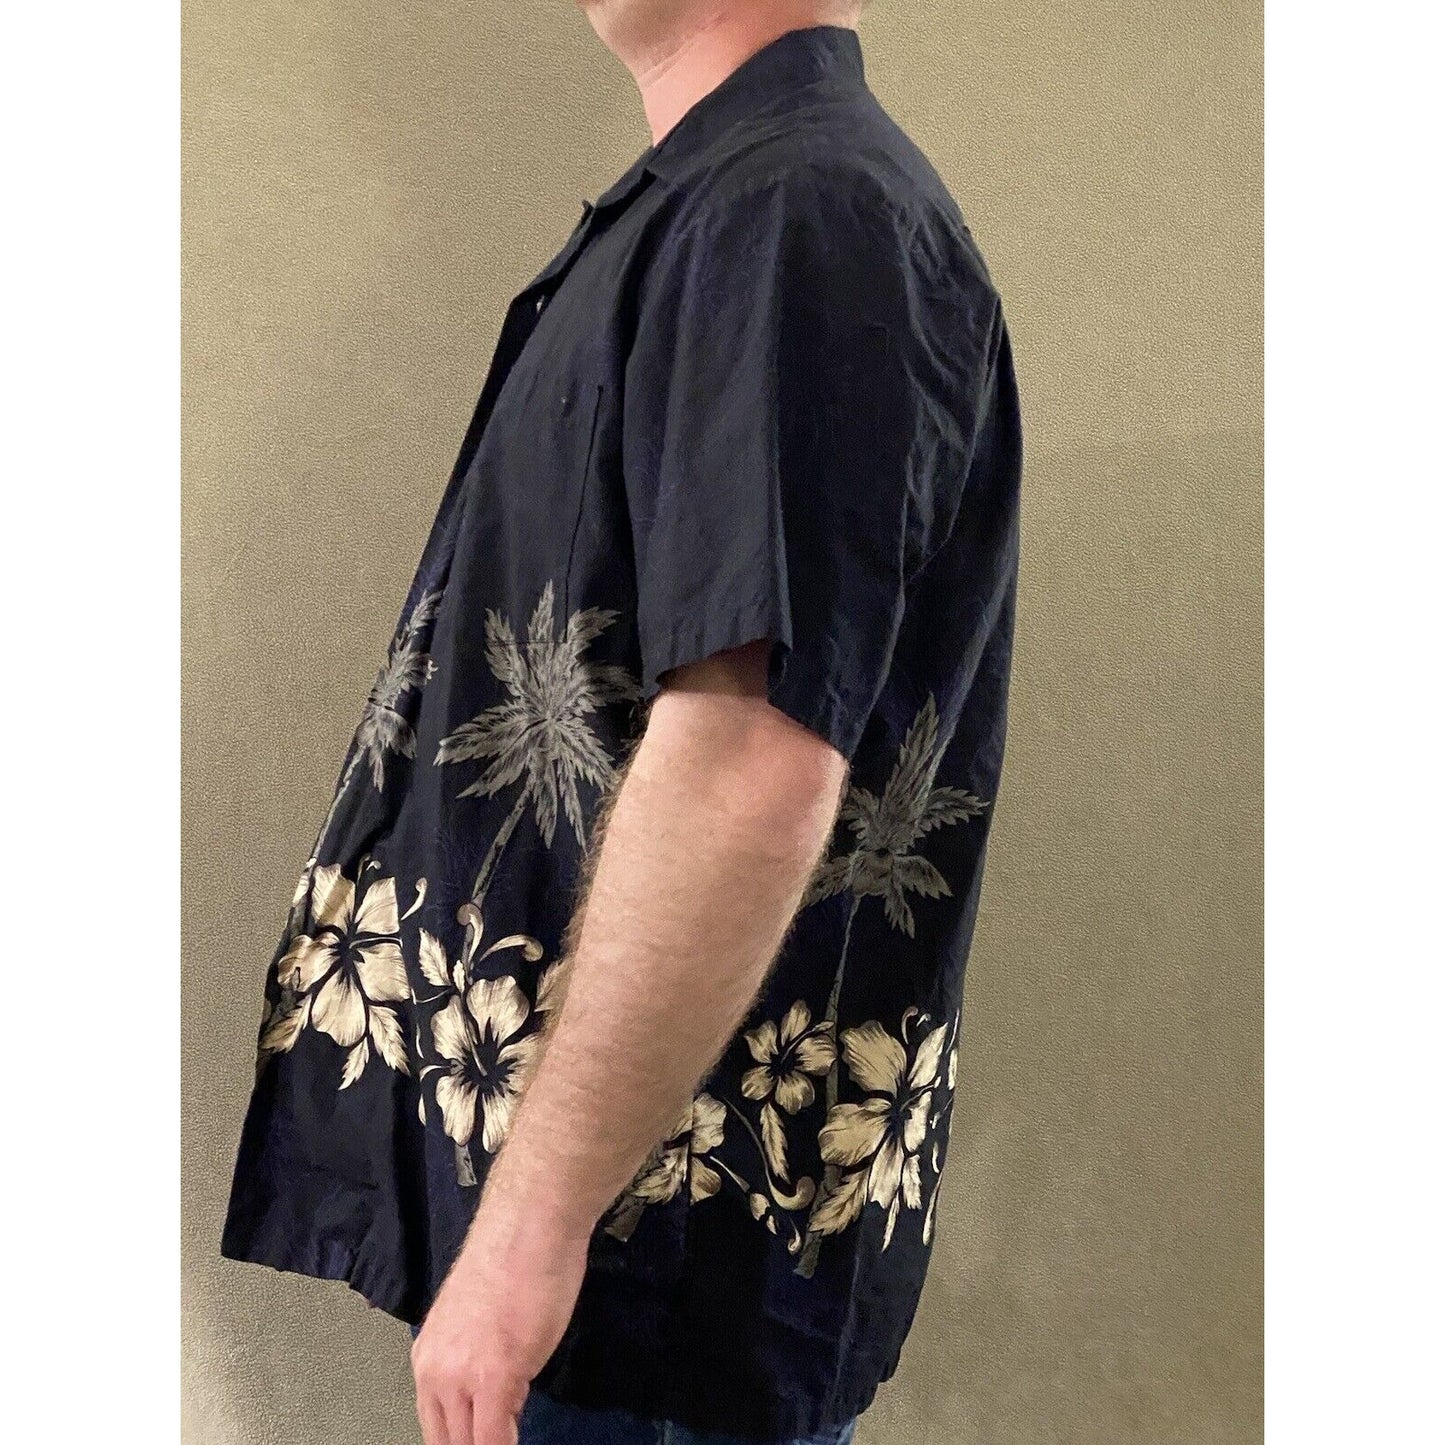 RJC Men’s XL Black Hawaiian Summer Palm Trees Hibiscus Flowers Button-down Shirt